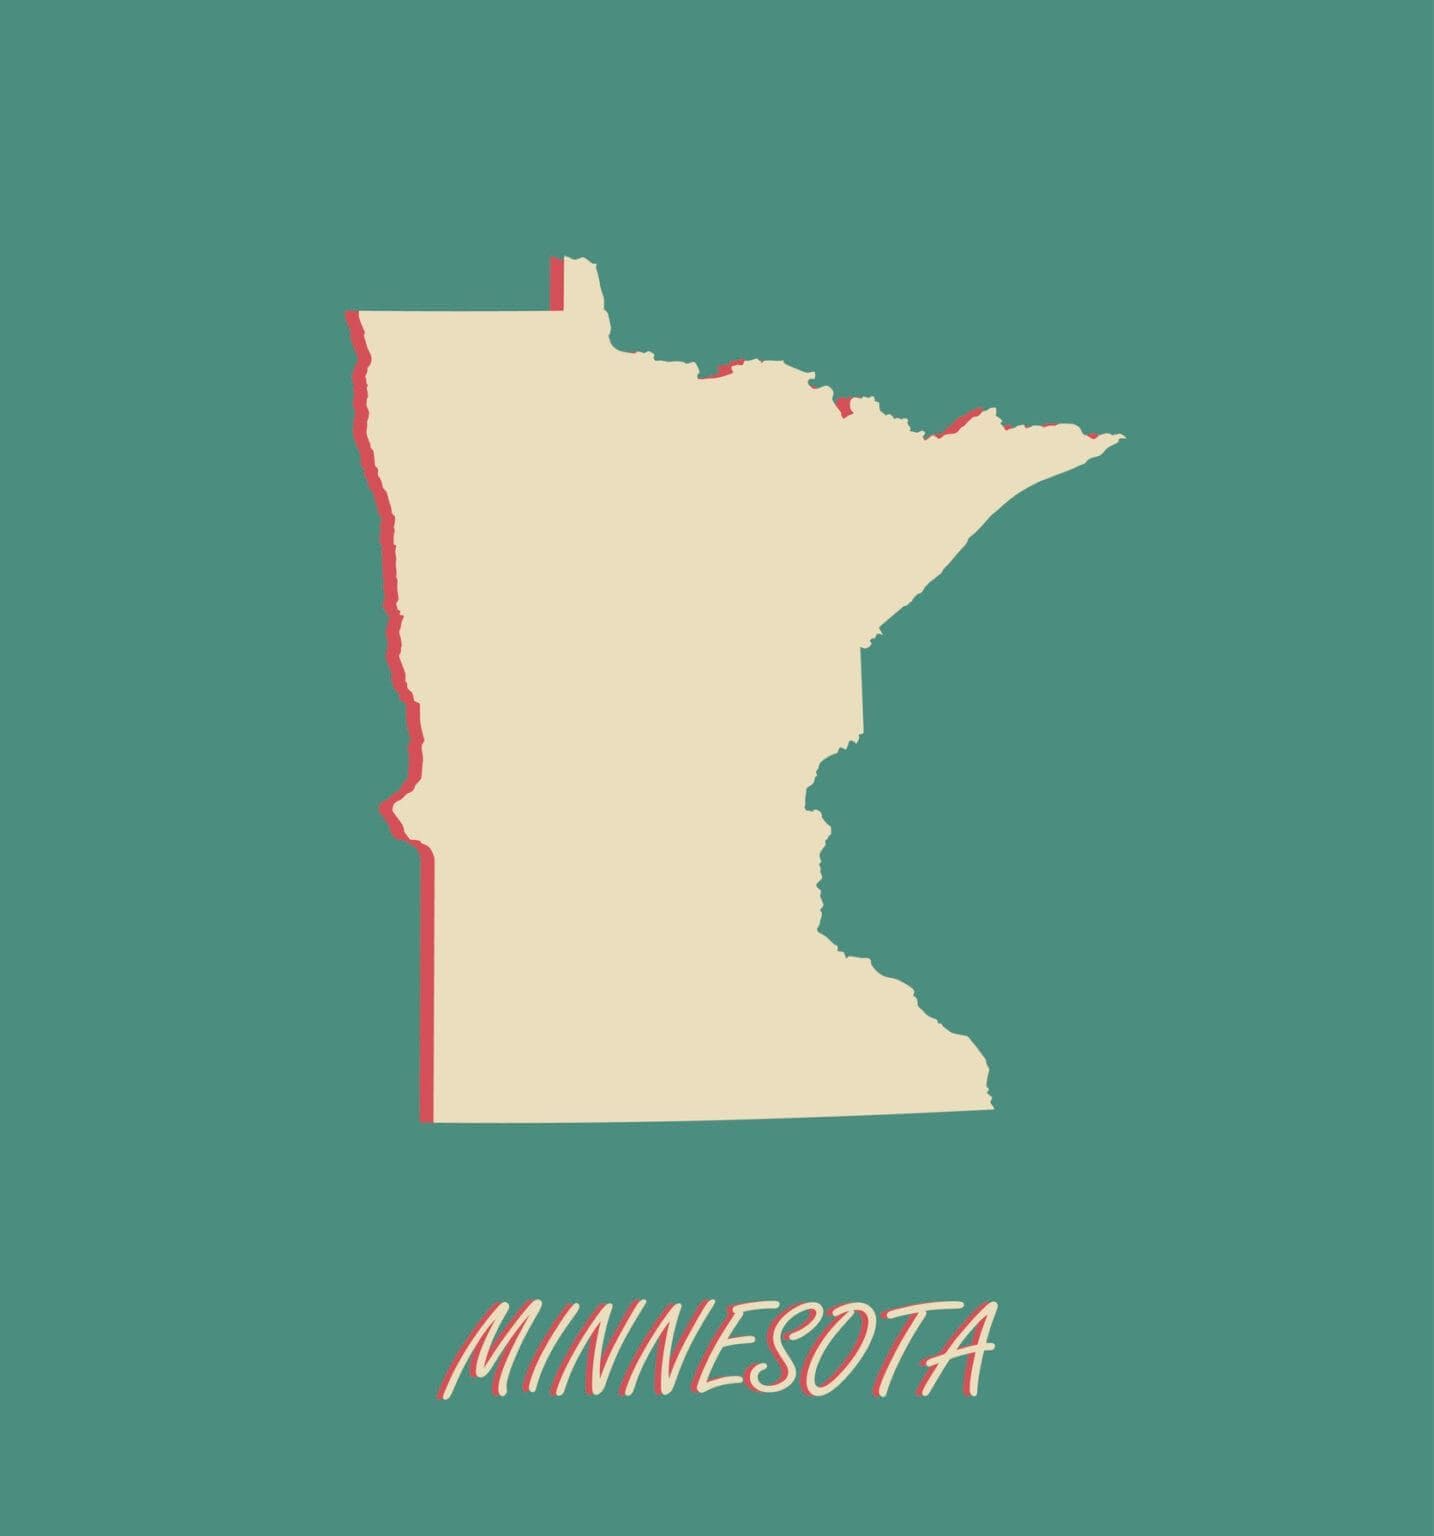 Minnesota State Page 1434x1536 .optimal 